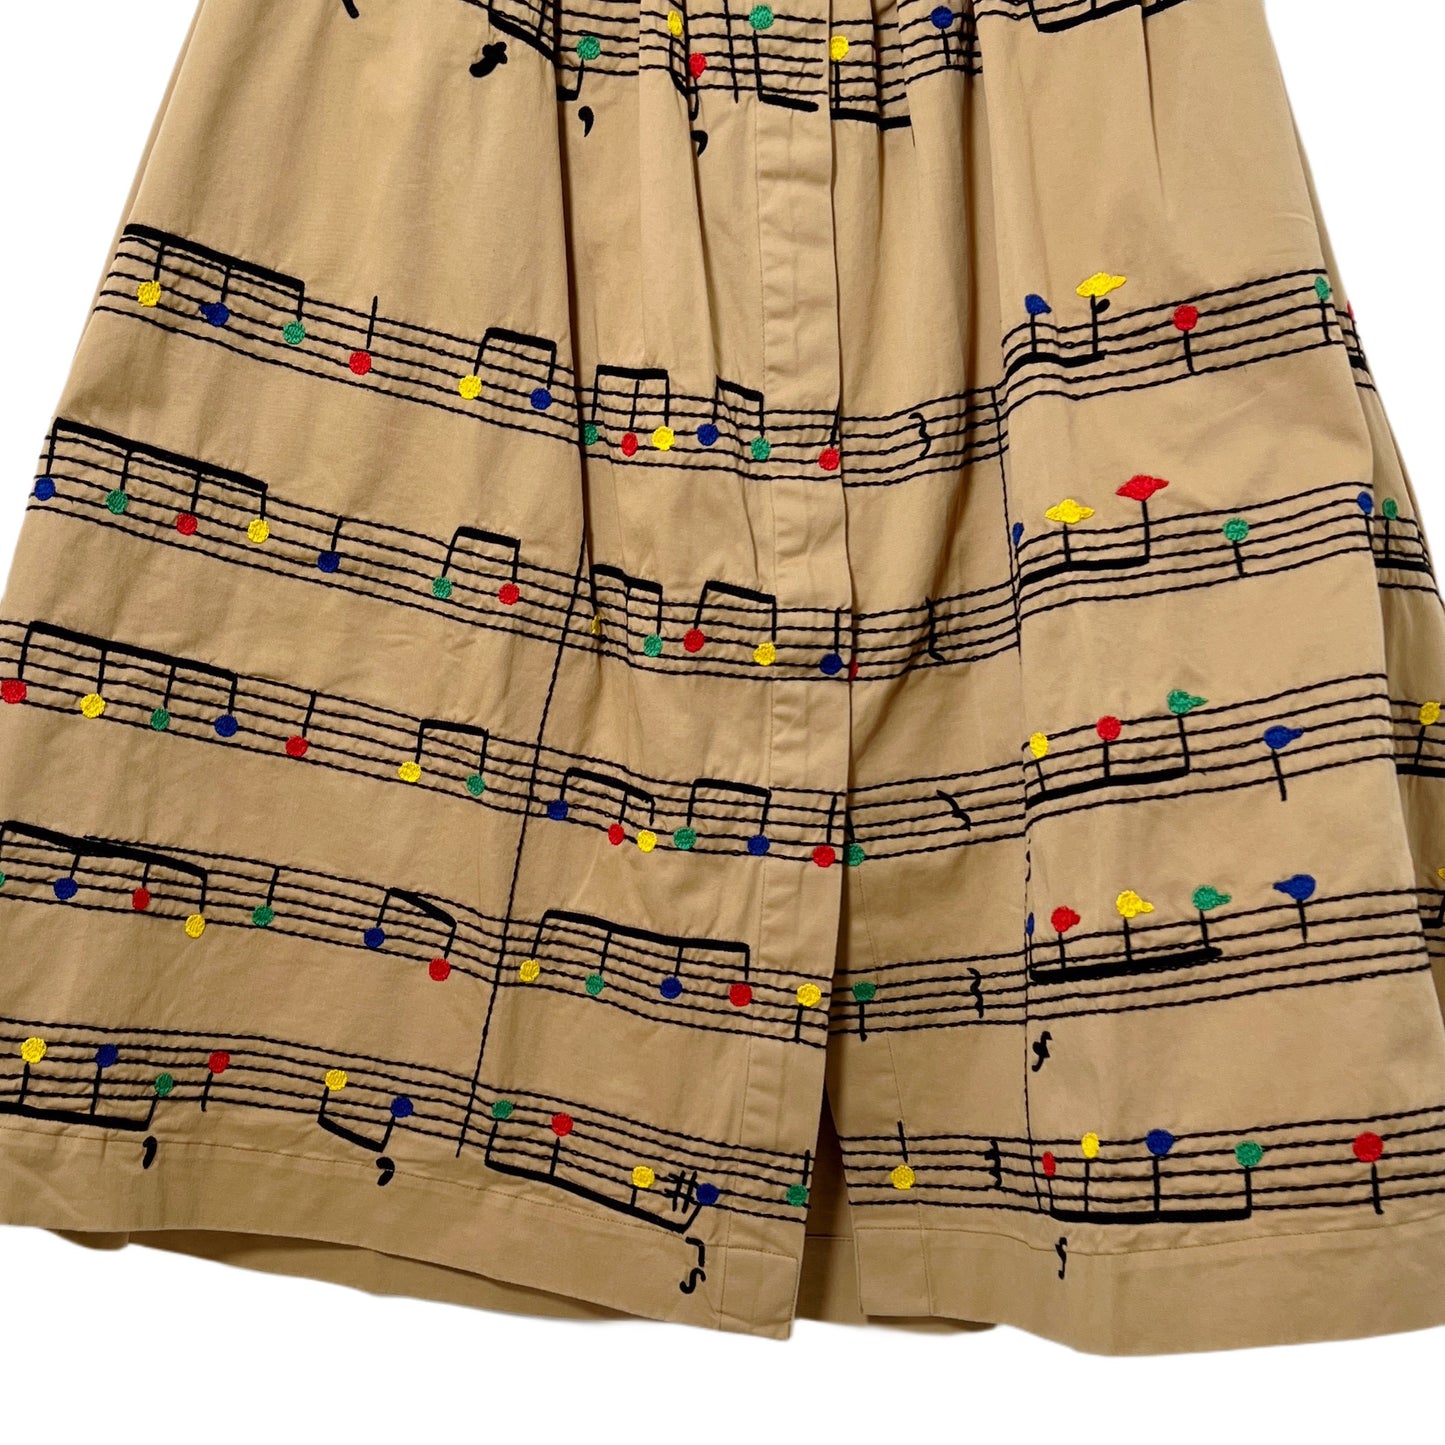 【Mii Collection】ミュージックスカート